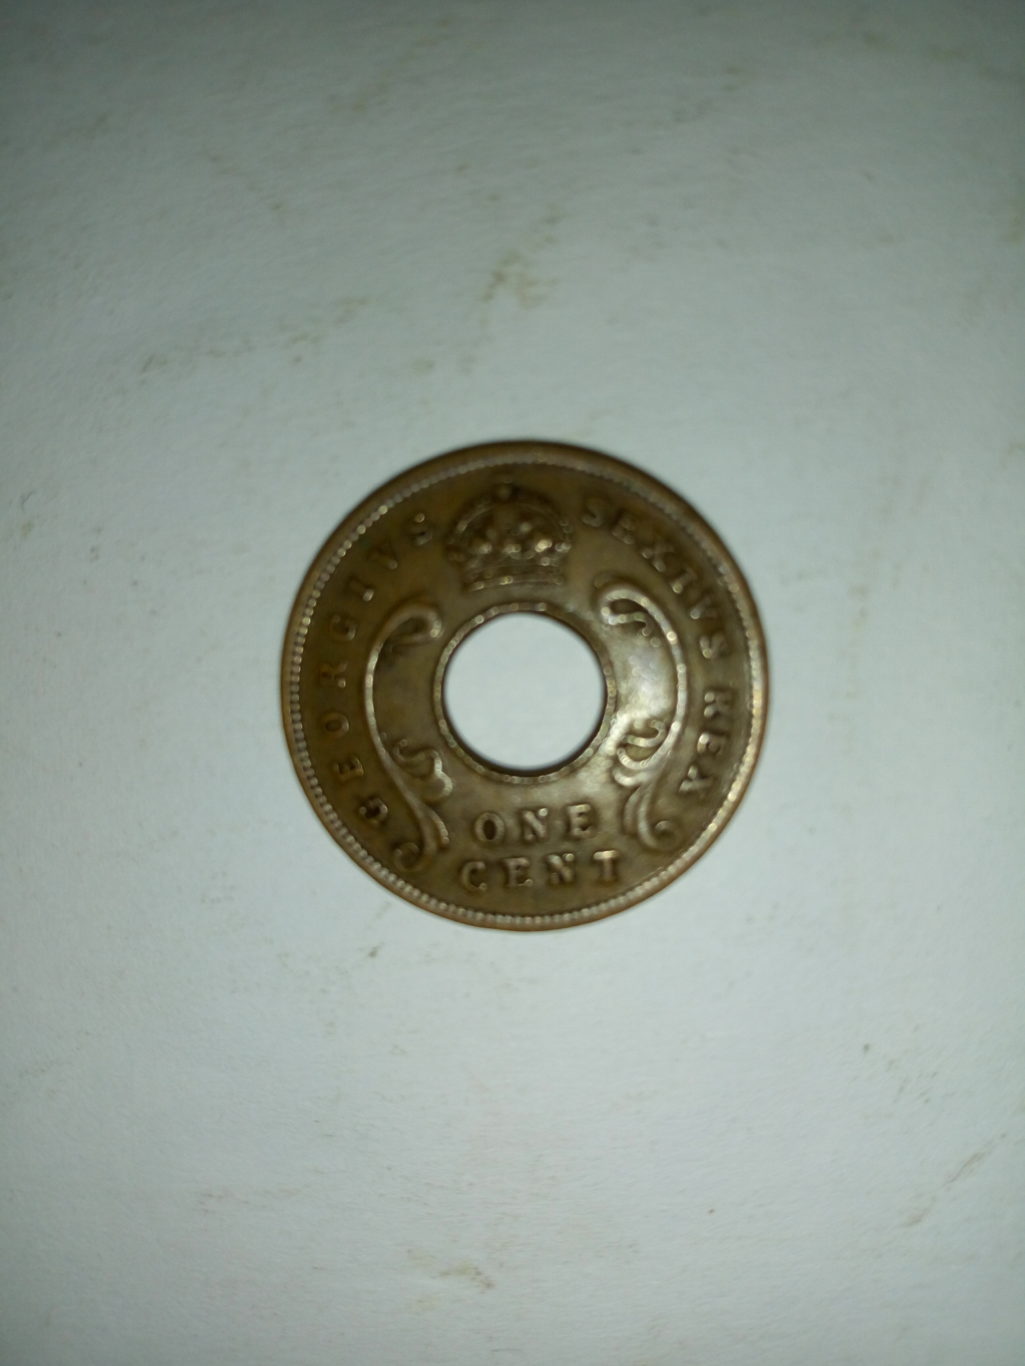 1952_georgivs east Africa 1 cent